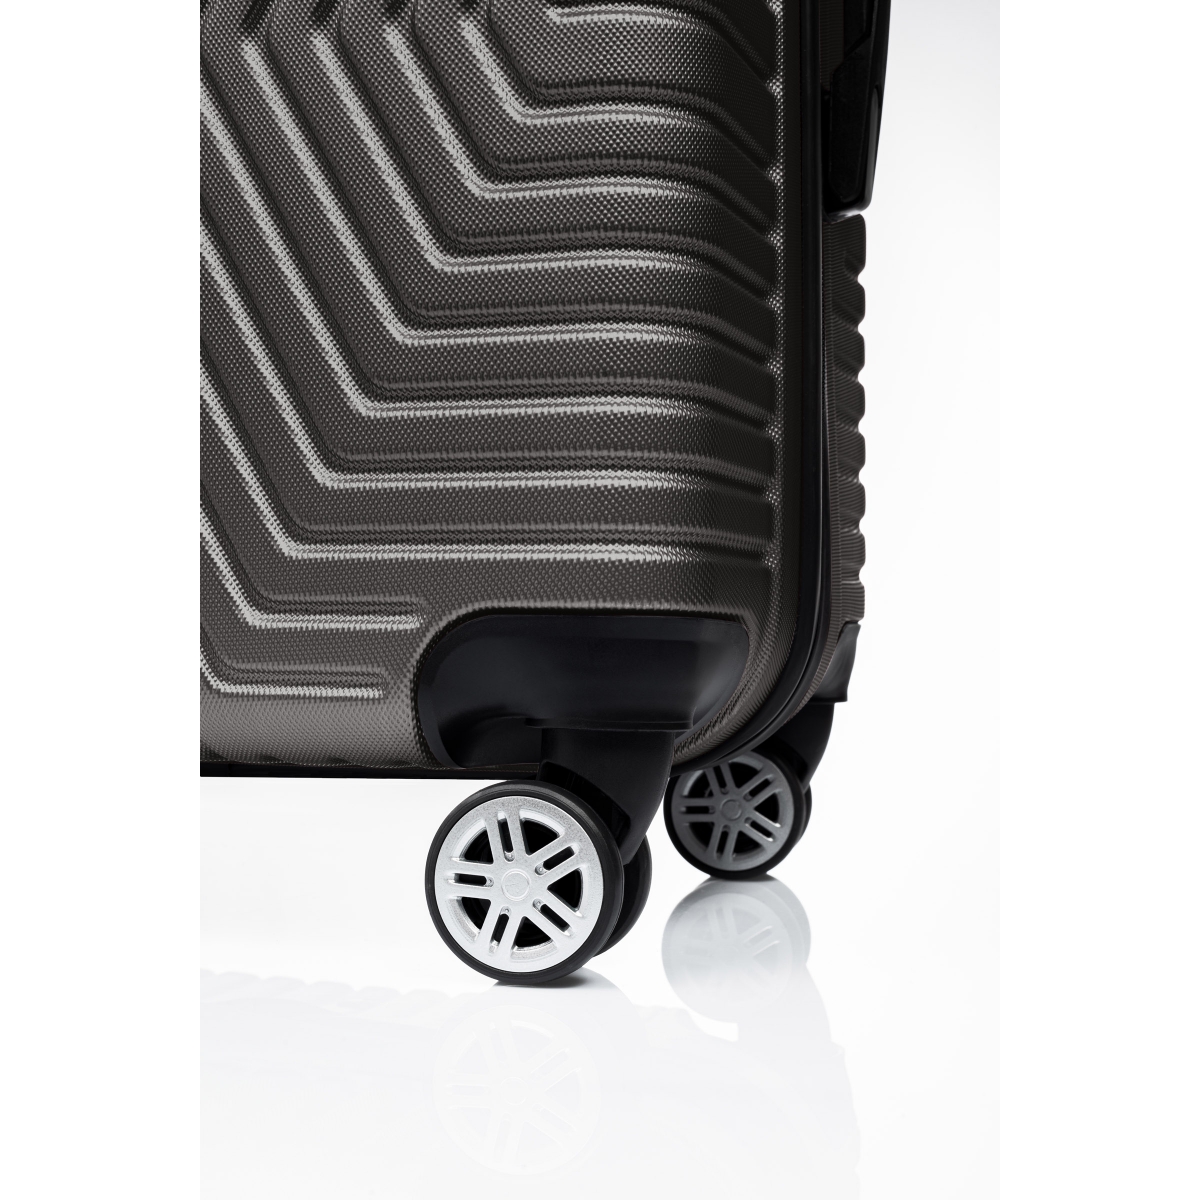 G&D Polo Suitcase ABS 3'lü Lüx Valiz Seyahat Seti - Model:600.02 Koyu Gri